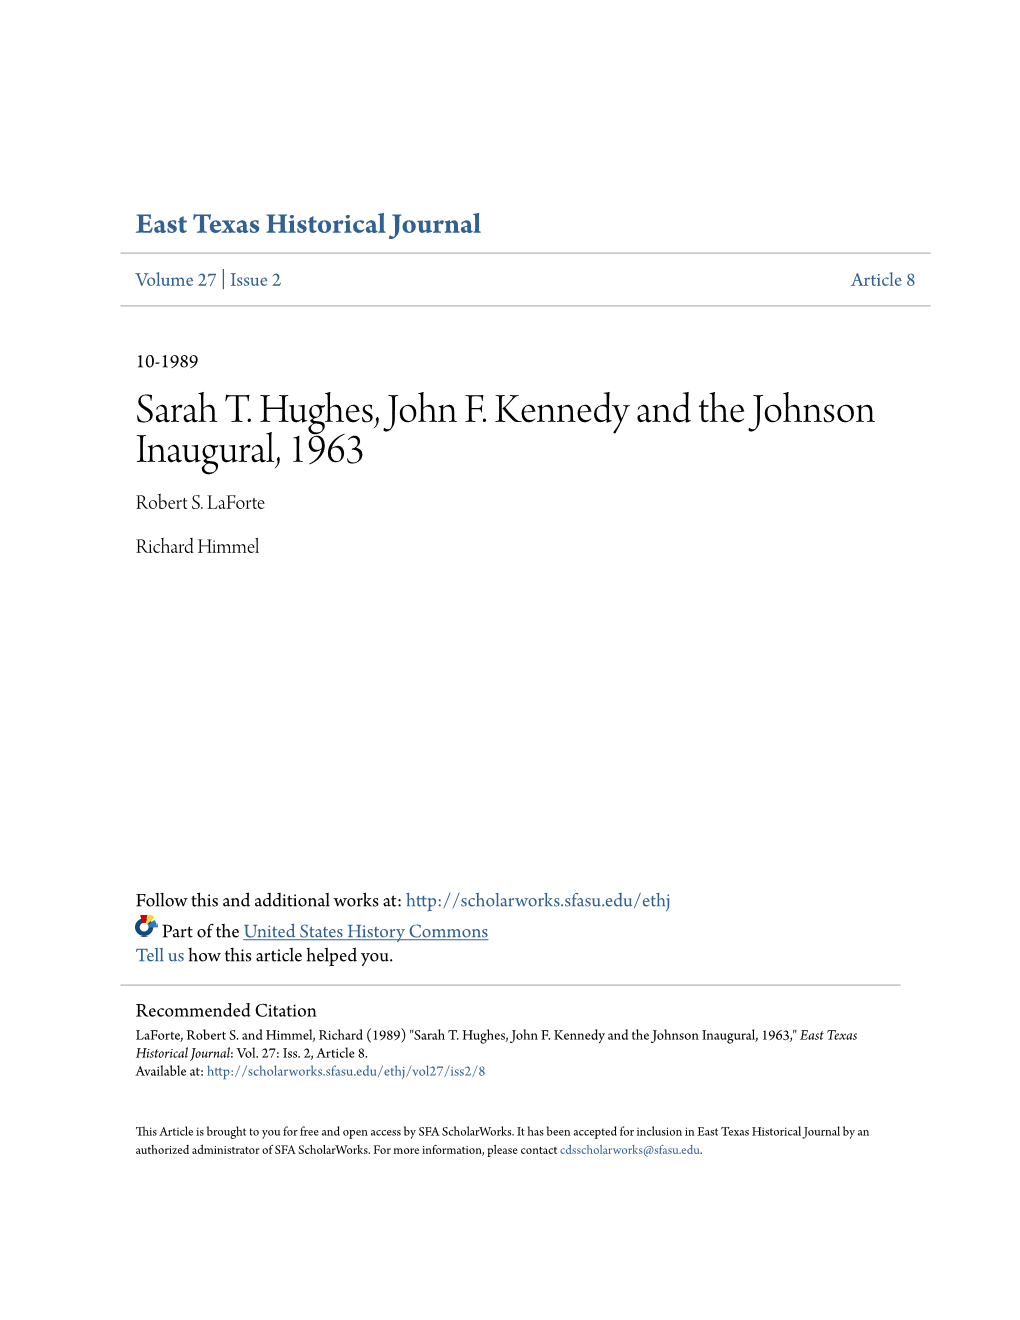 Sarah T. Hughes, John F. Kennedy and the Johnson Inaugural, 1963 Robert S